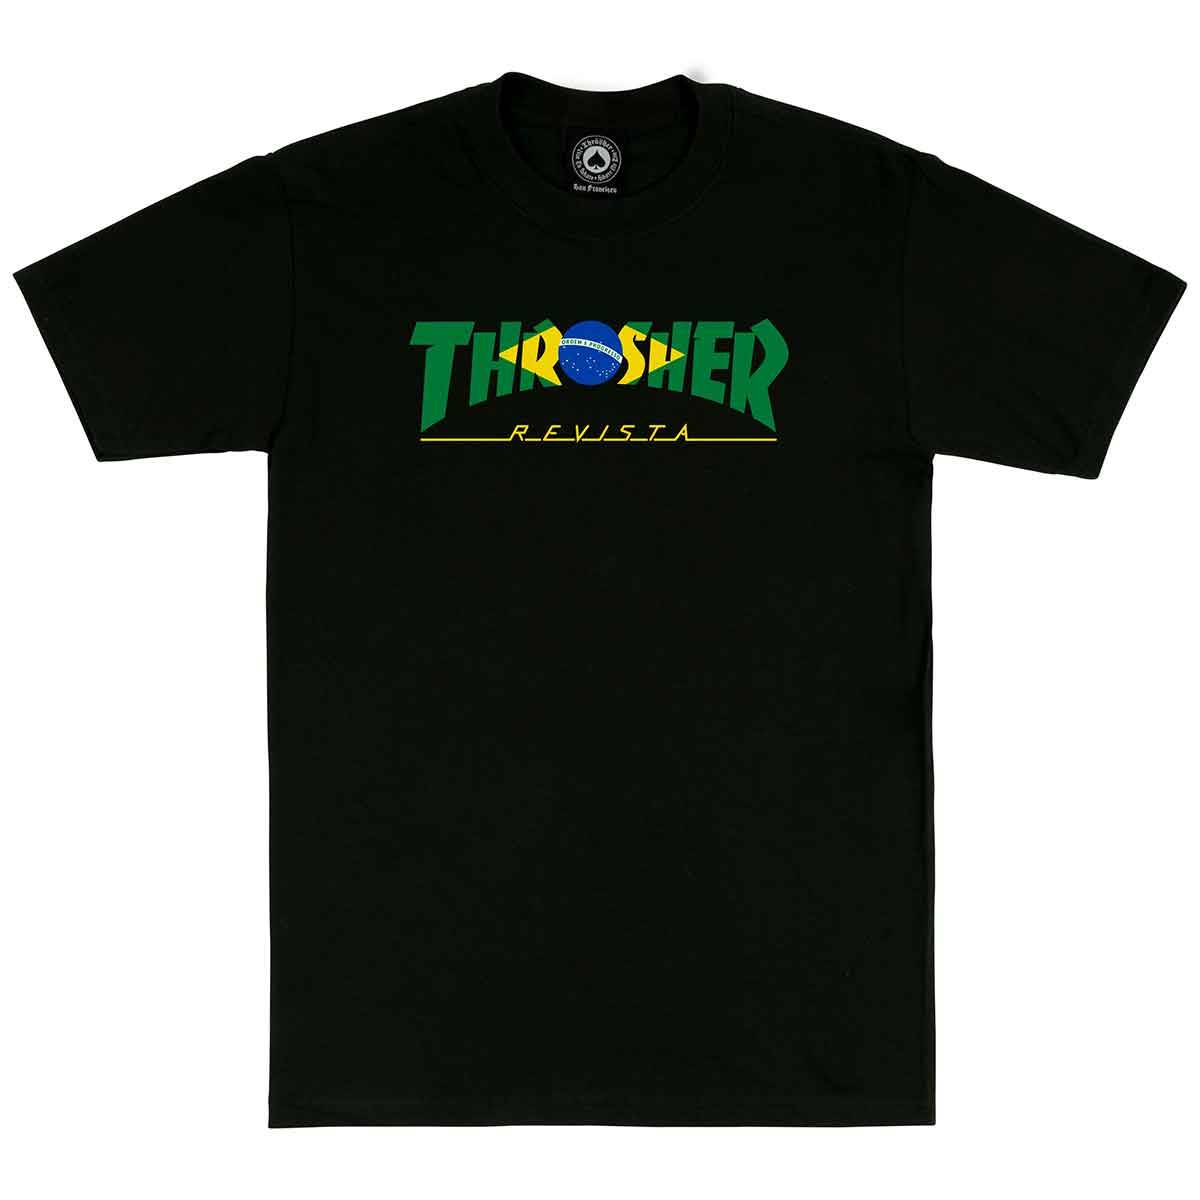 Thrasher Brazil Revista Black Shirt